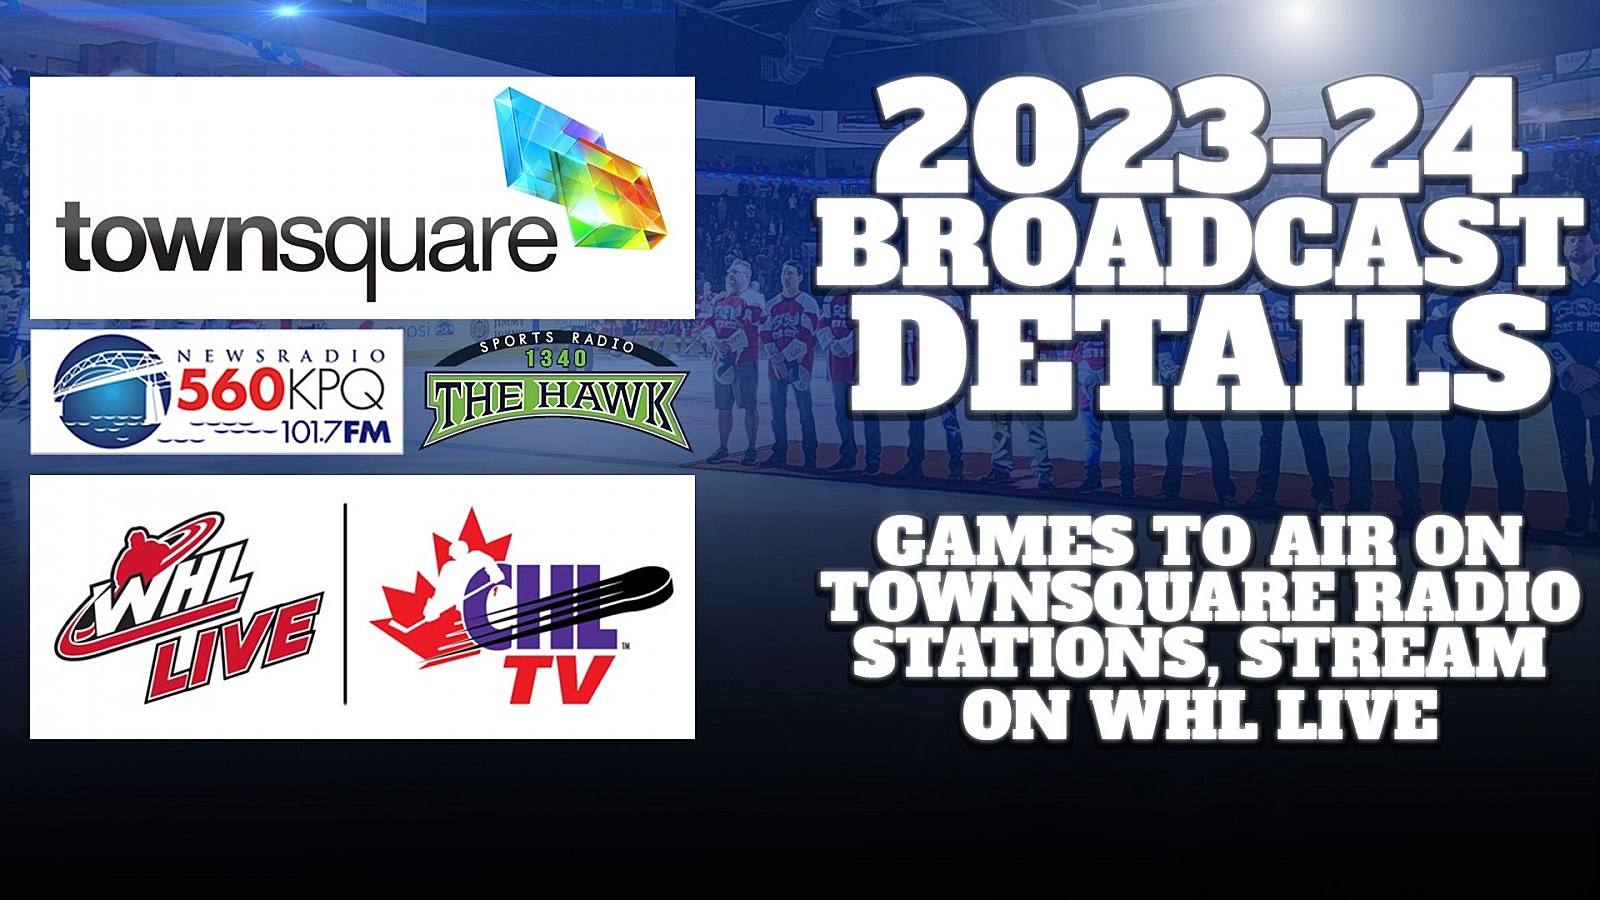 Wenatchee Wild Hockey on KPQ and New Streaming Service in 2023-24